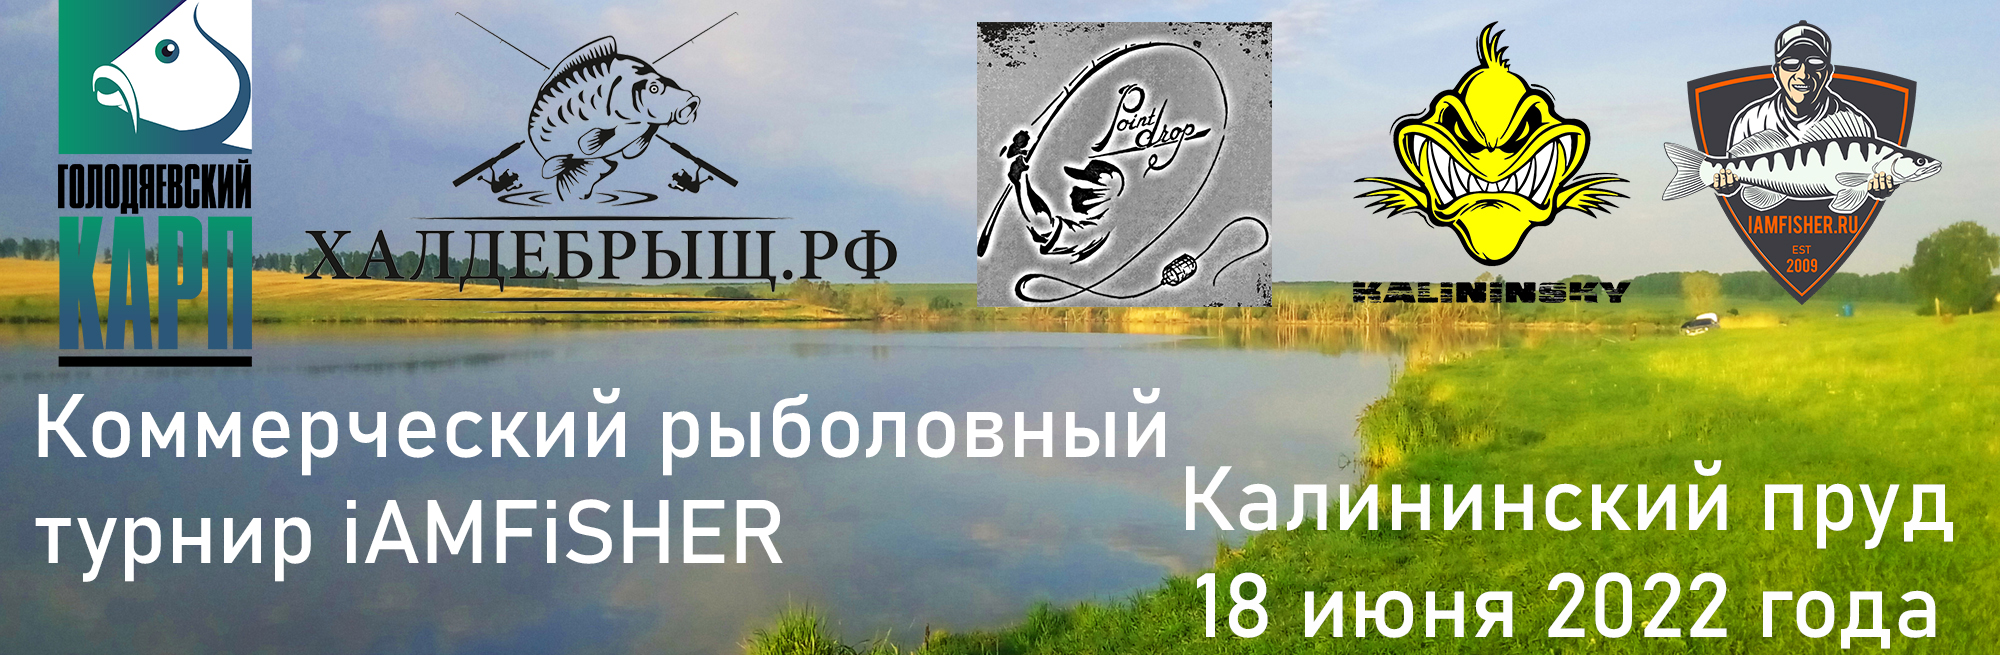 Коммерческий рыболовный турнир iAMFiSHER